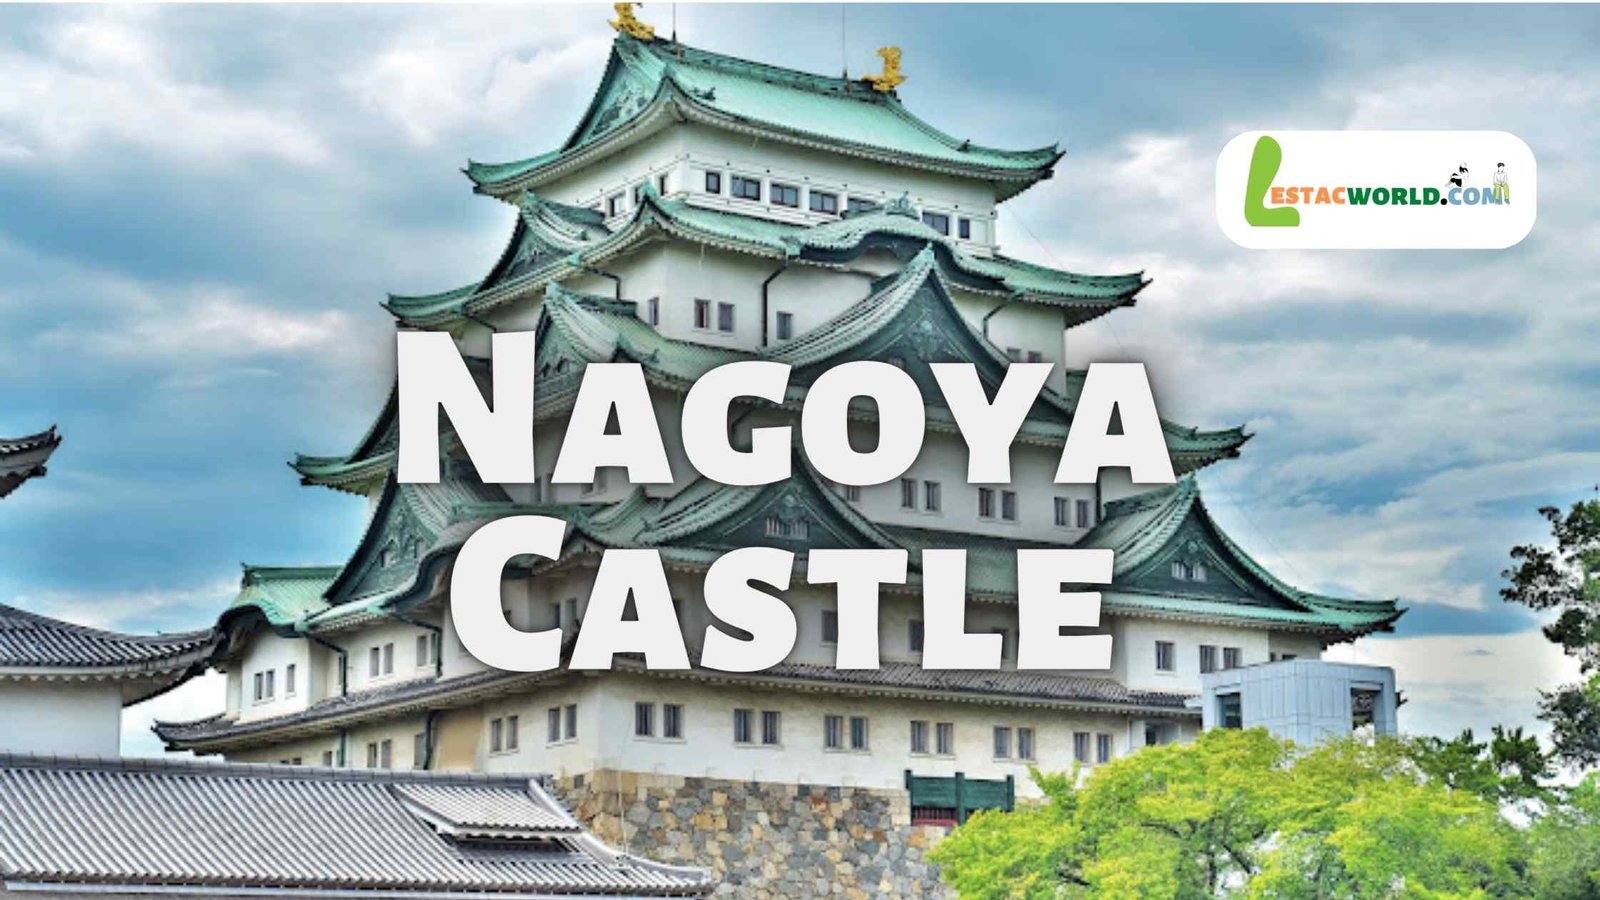 About Nagoya Castle